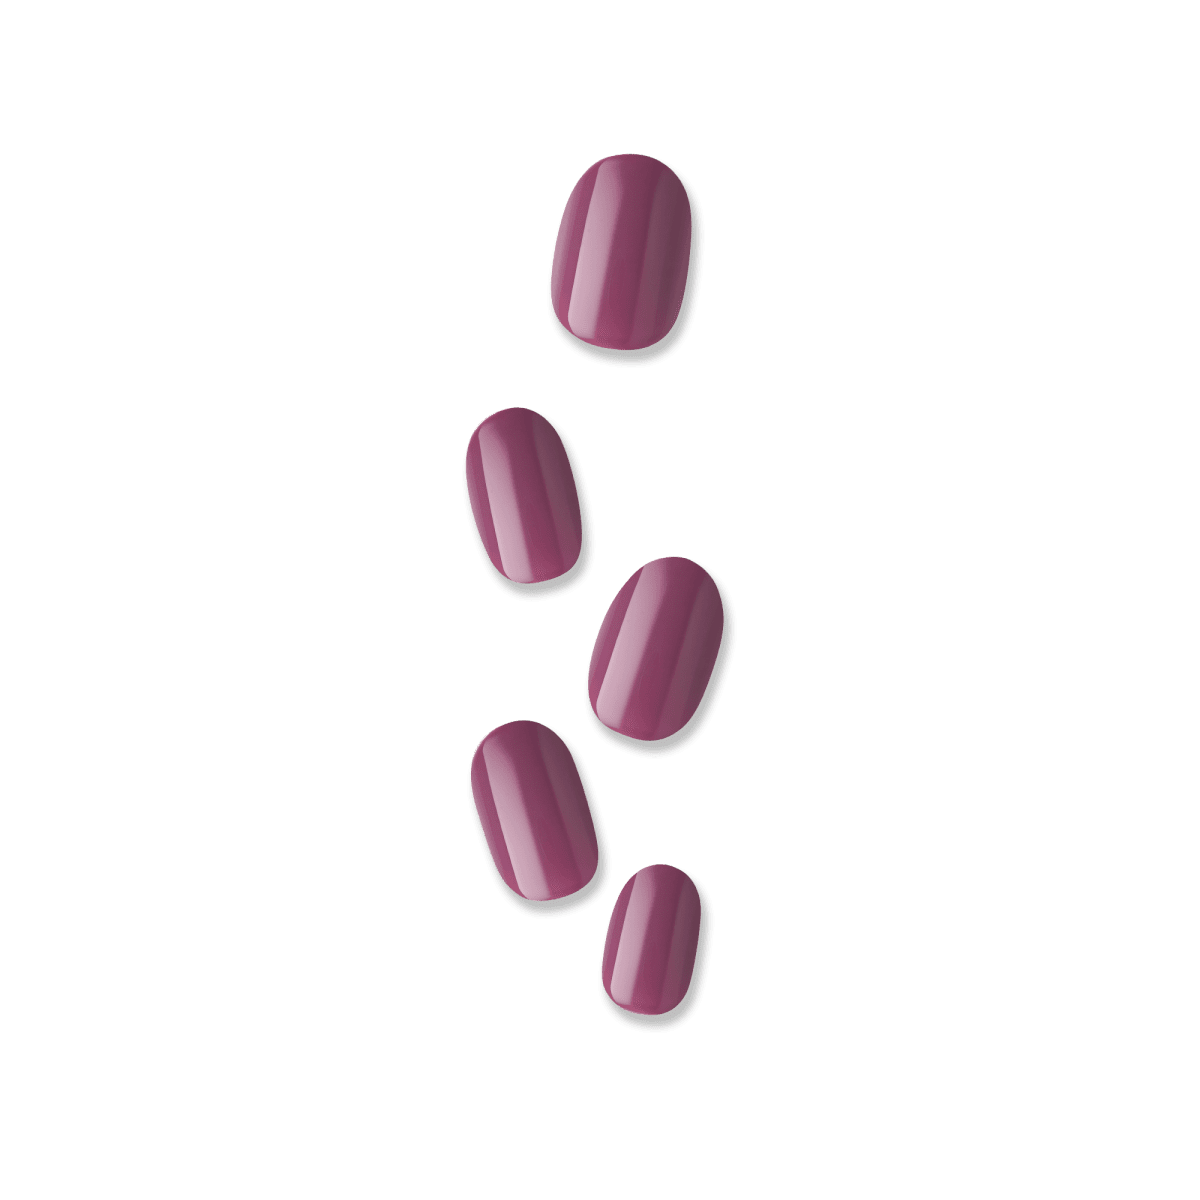 imPRESS Color Press-On Nails - Purple veil